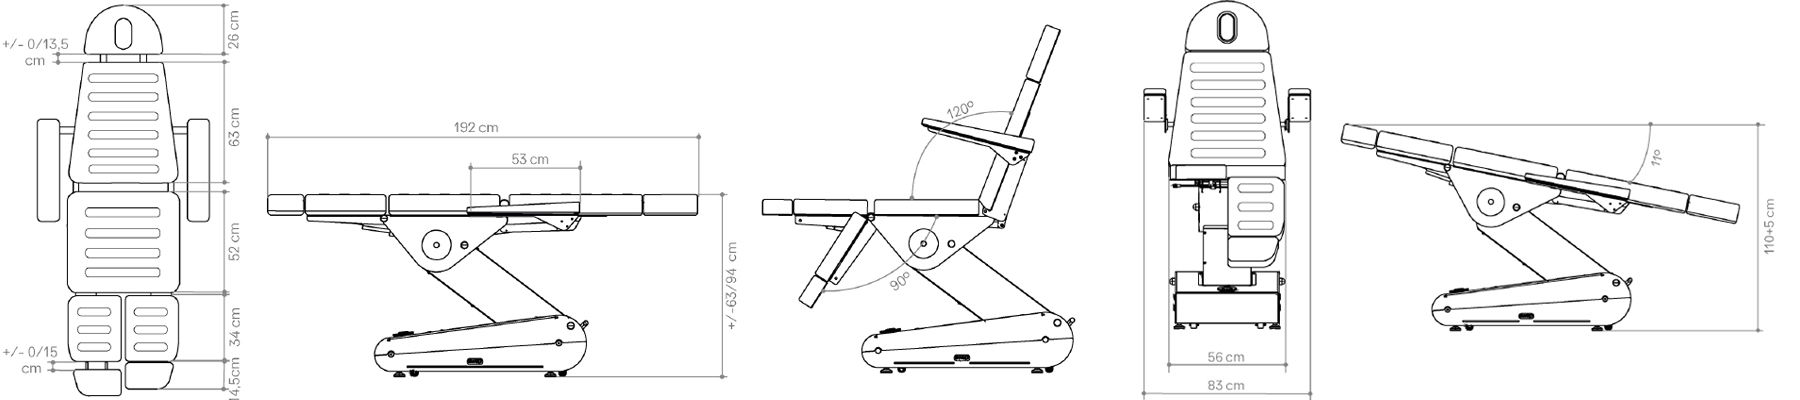 Swop P3 Podo Podiatry Chair: Measurements